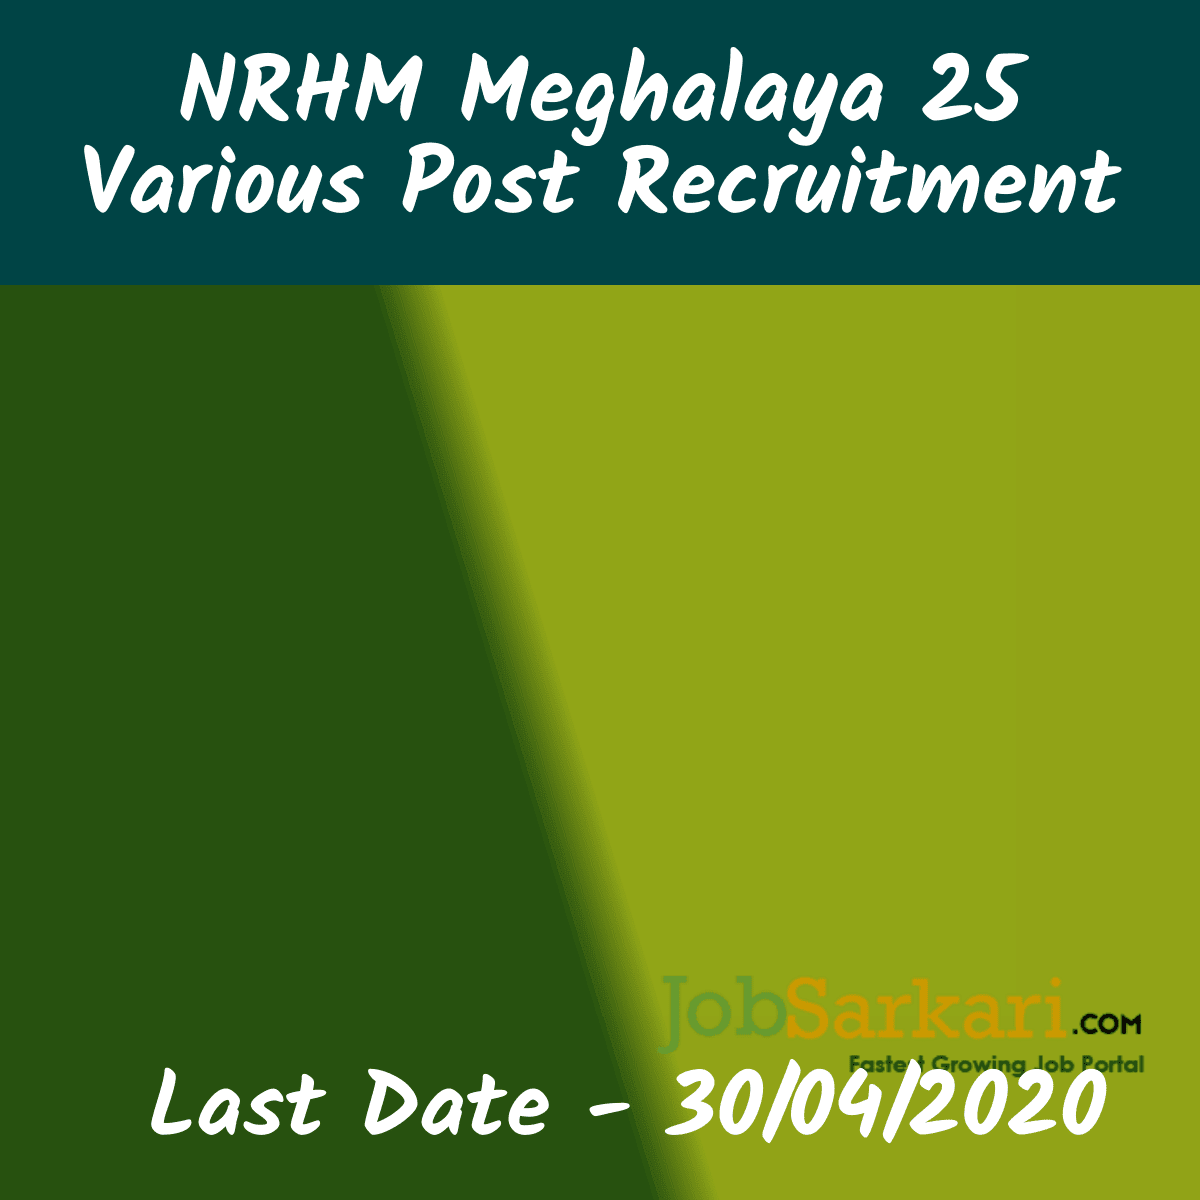 NRHM Meghalaya Recruitment 2020 For Various Post 1